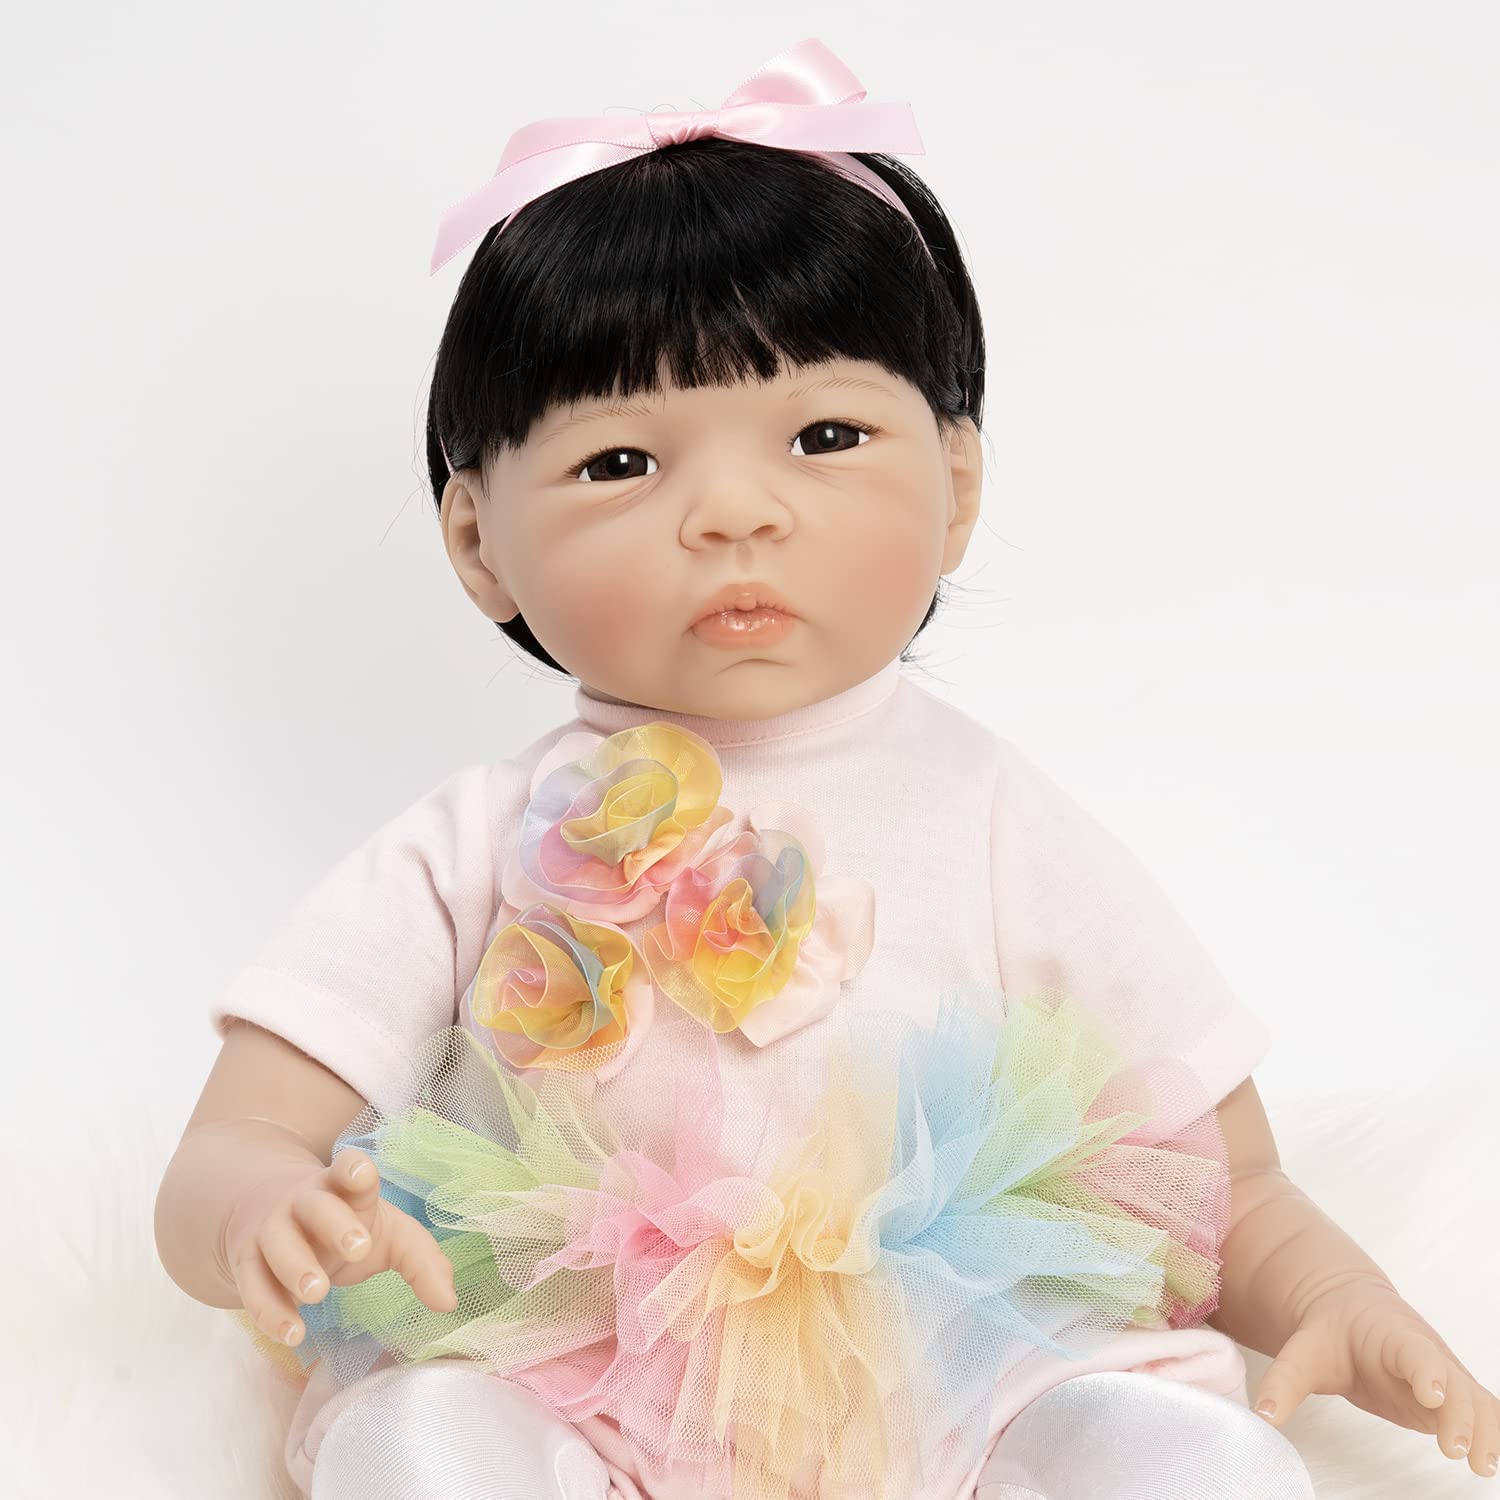 Paradise Galleries Asian Rainbow Ballerina Doll, 19.5 inch Reborn Toddler Made in GentleTouch Vinyl, 5-Piece Reborn Doll Gift Set